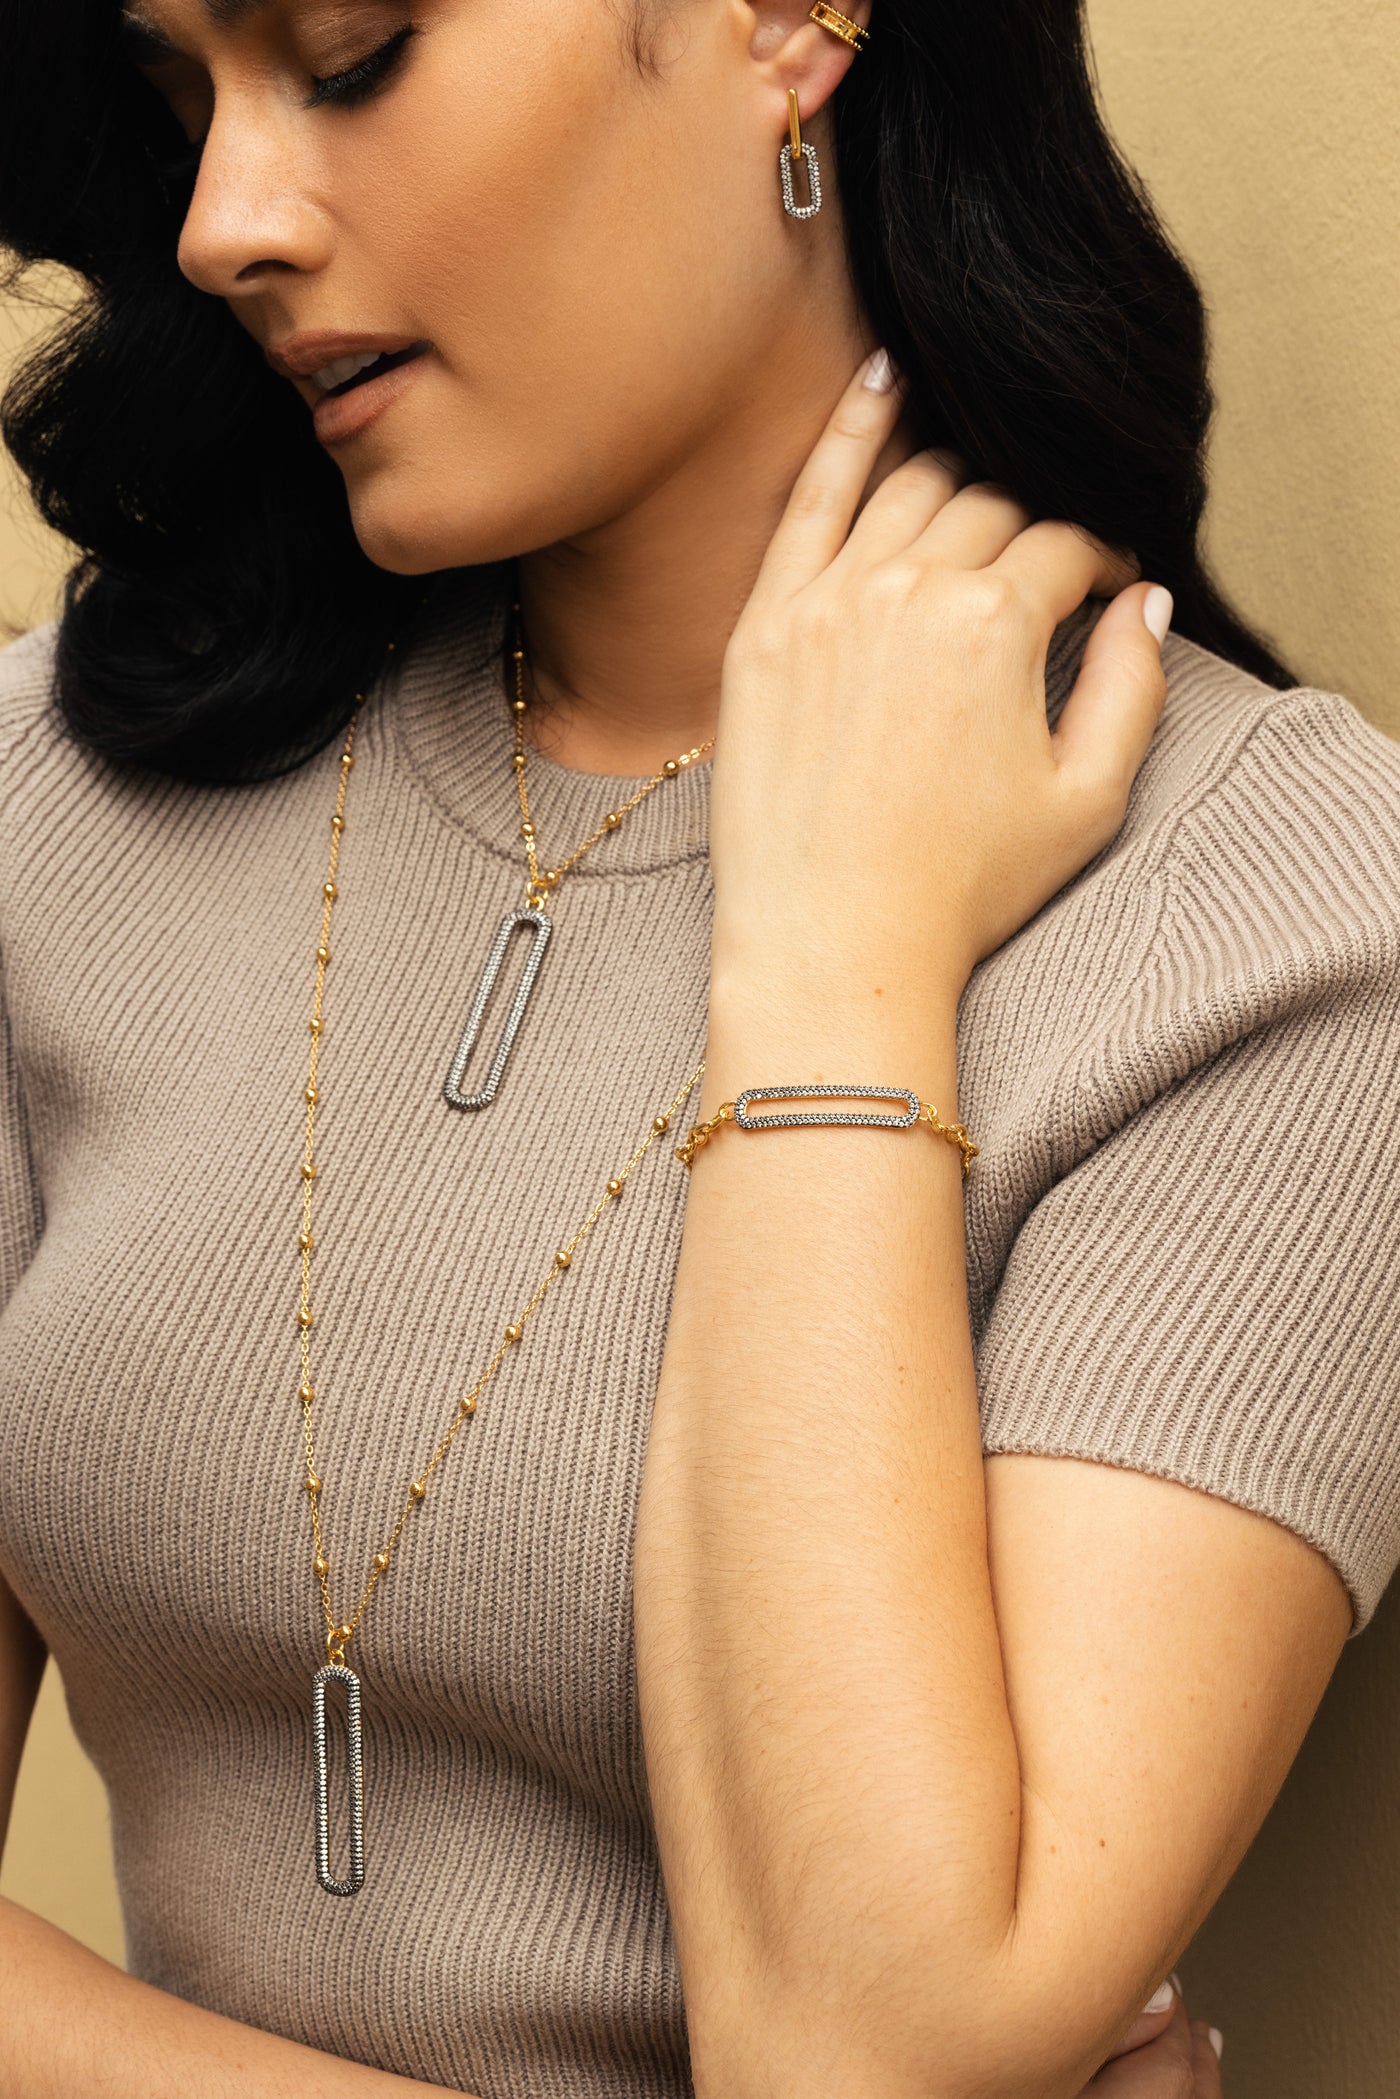 Pave Link Bracelet with Chain - Josefina Jewels